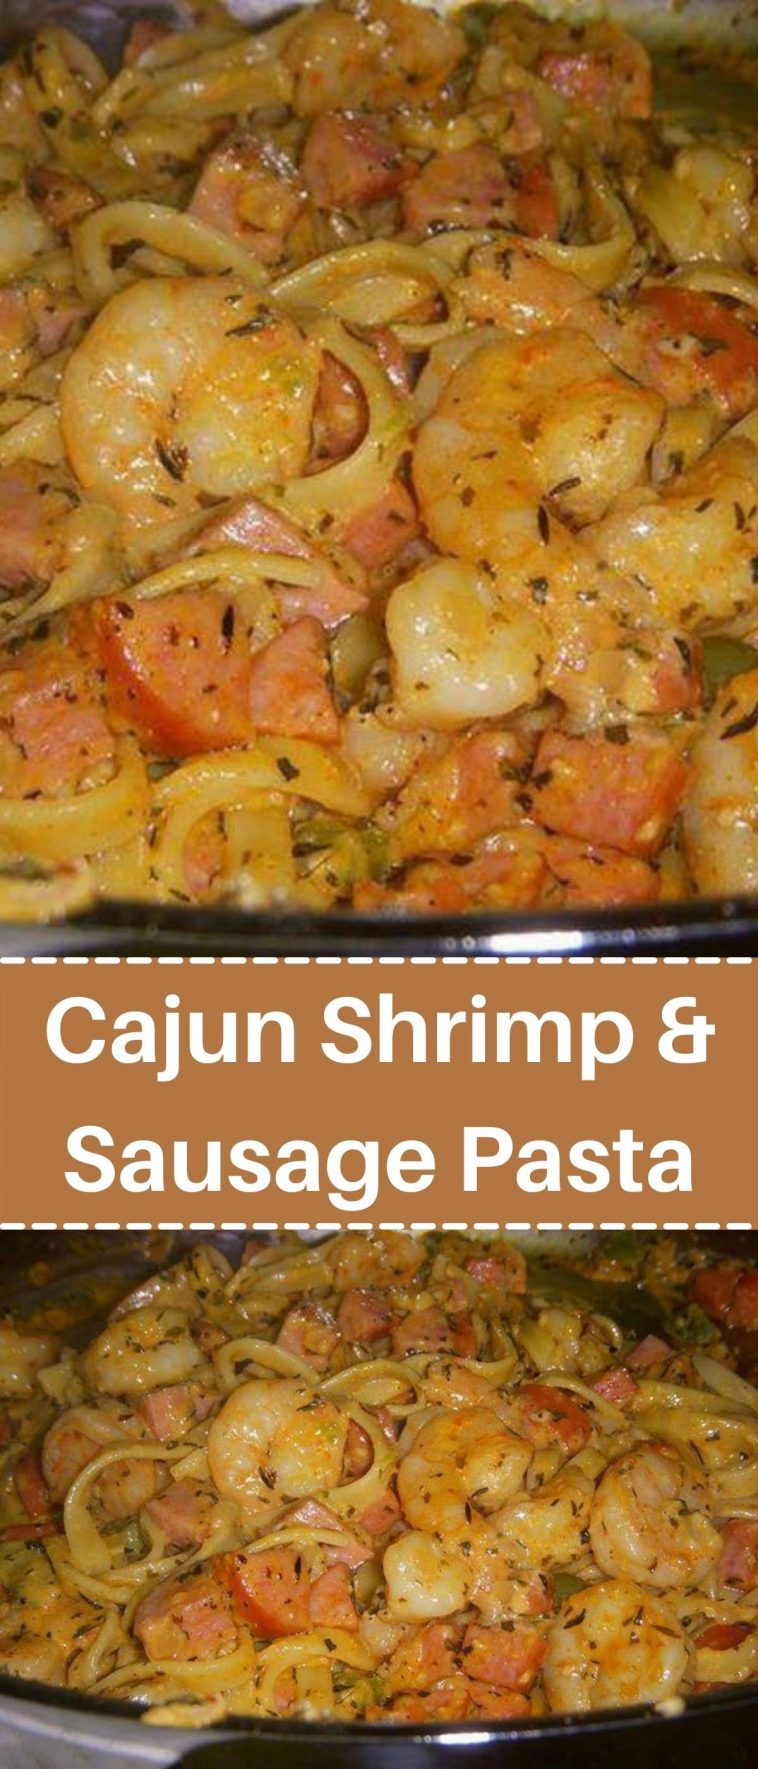 Cajun Shrimp & Sausage Pasta